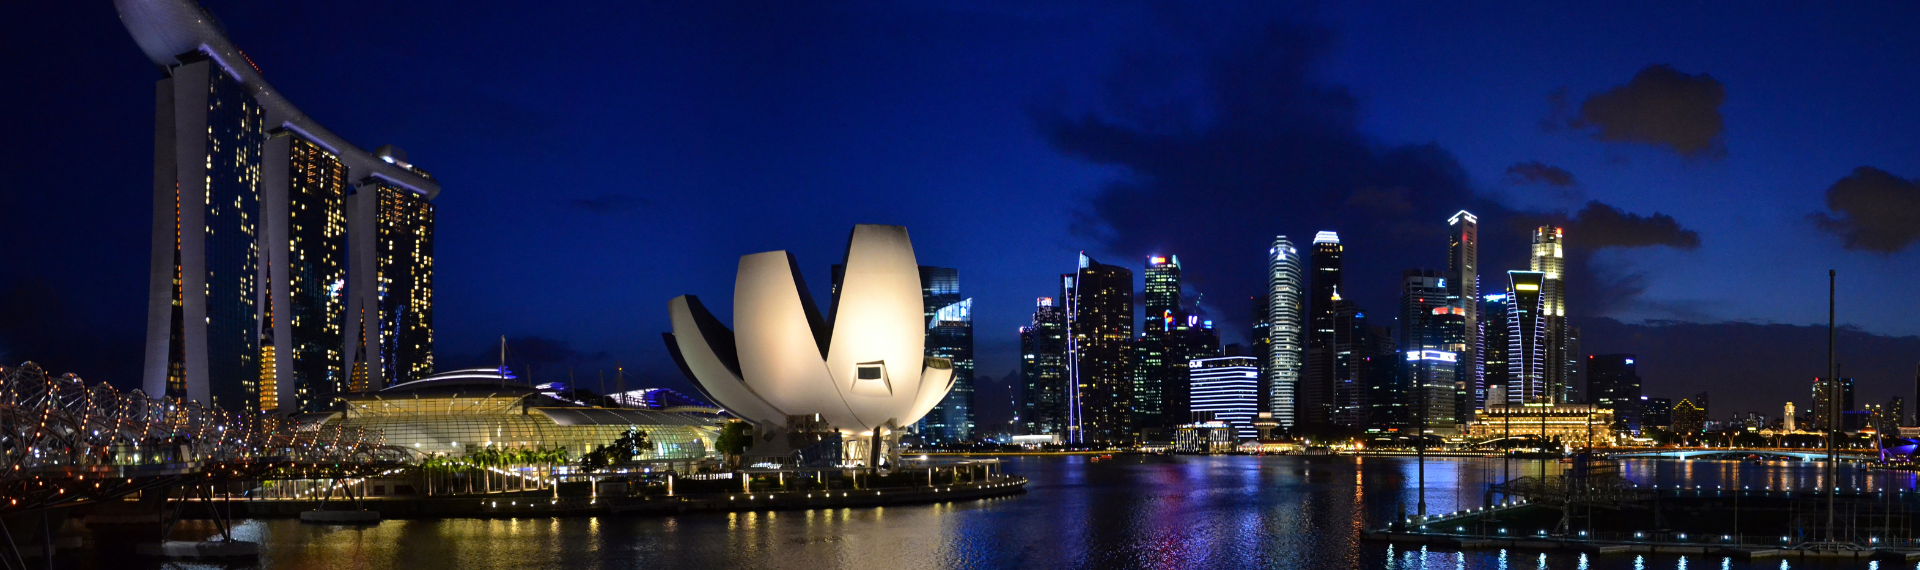 5 Nights Singapore Honeymoon Package With Cruise